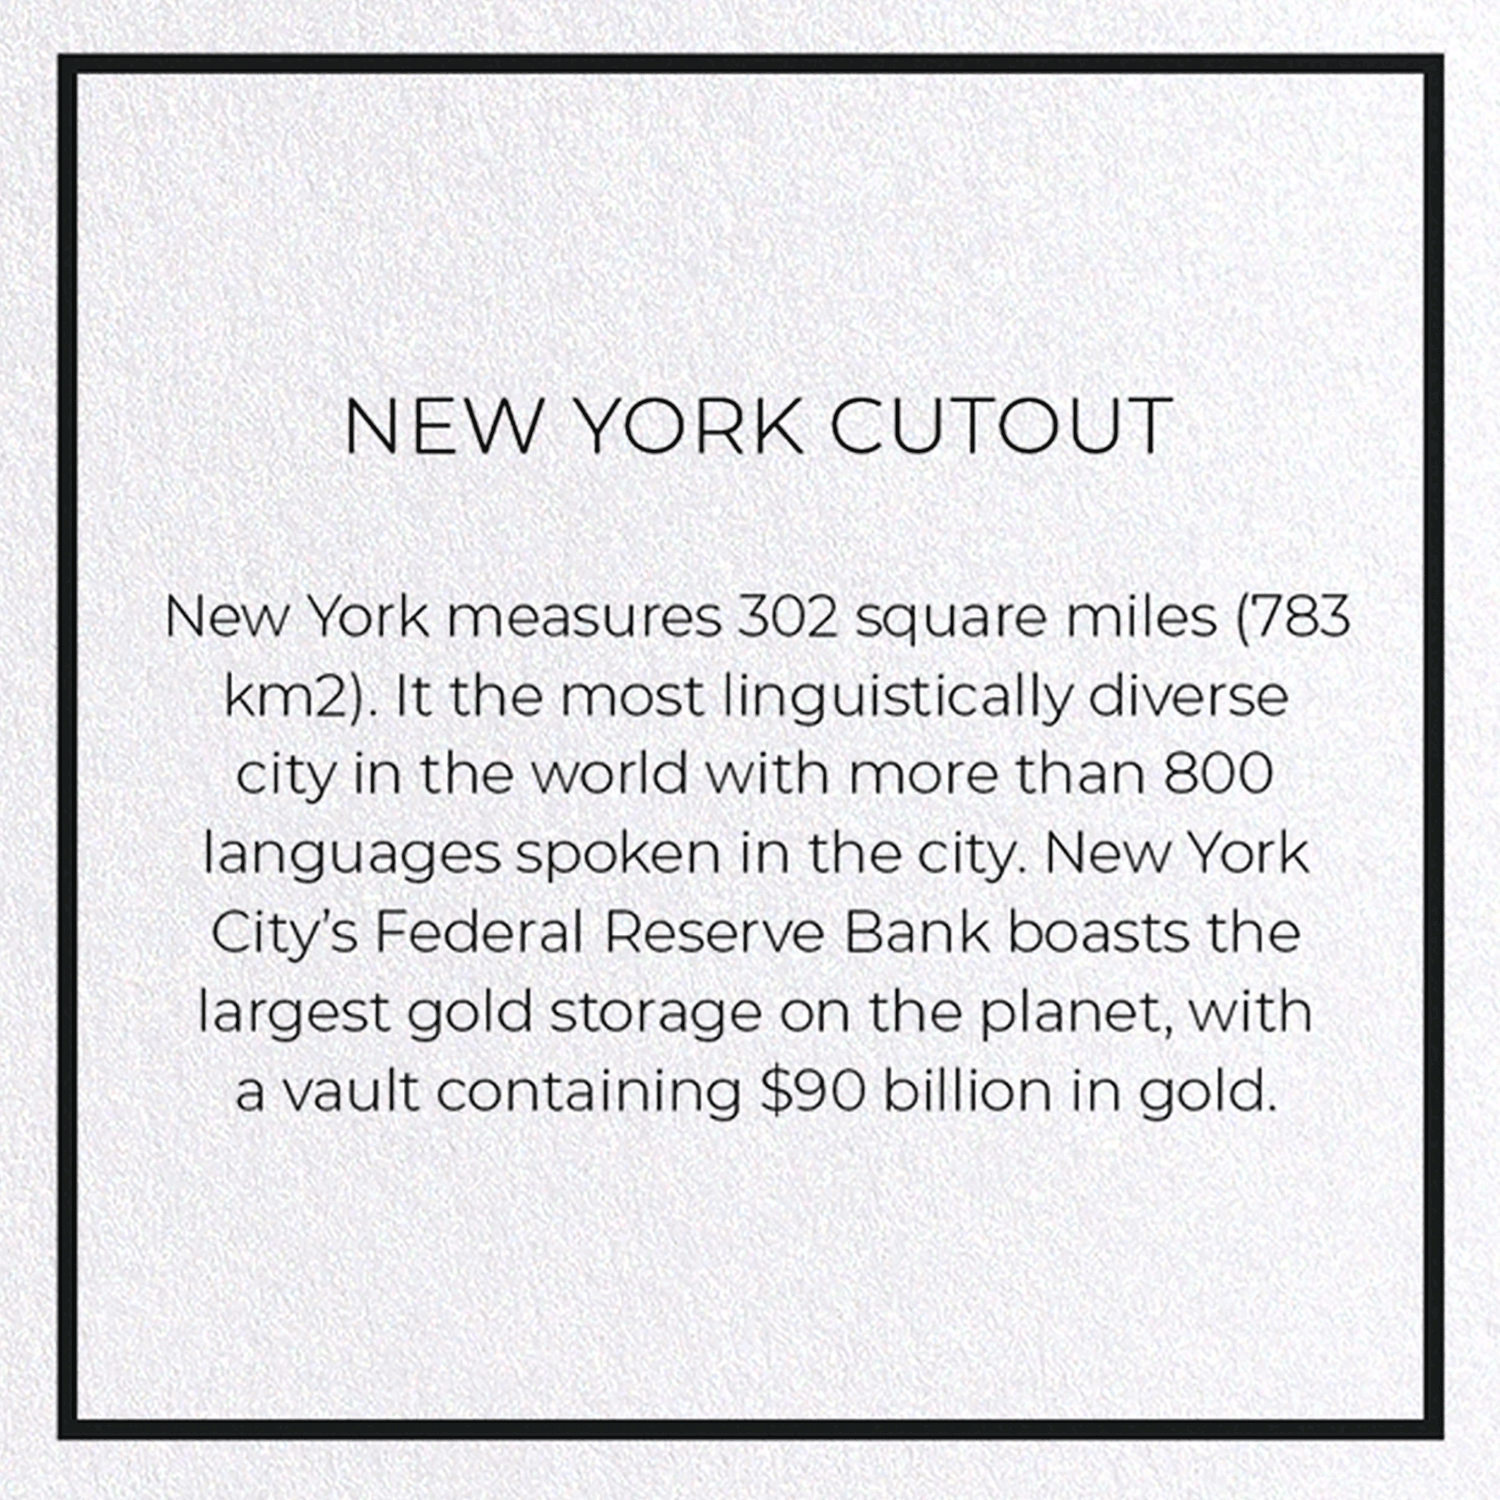 NEW YORK CUTOUT: Map Cutout Greeting Card